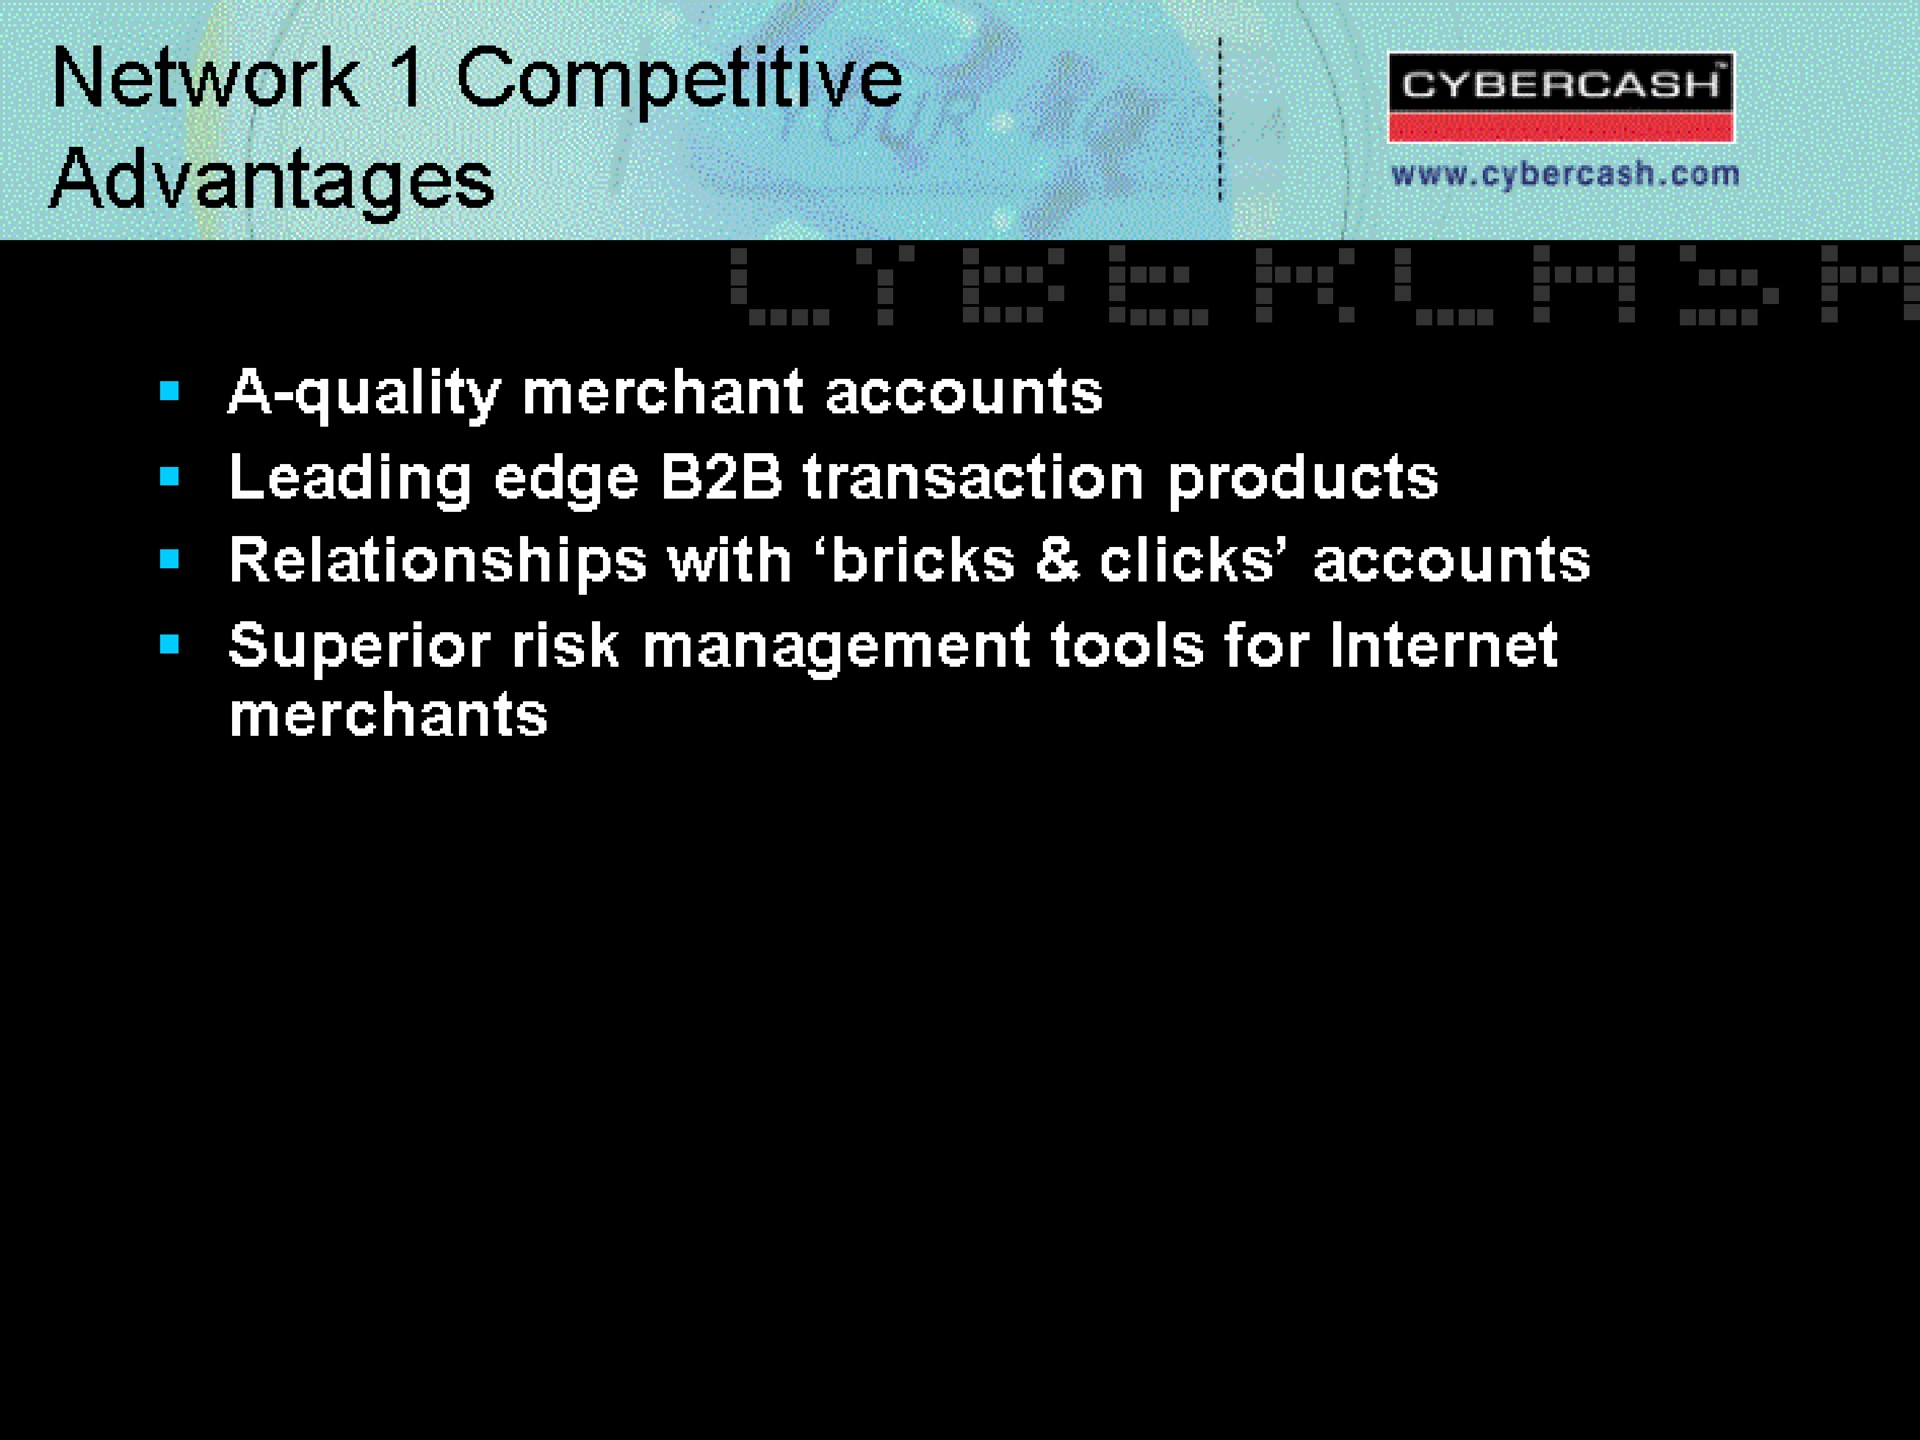 network competitive advantages | CyberCash